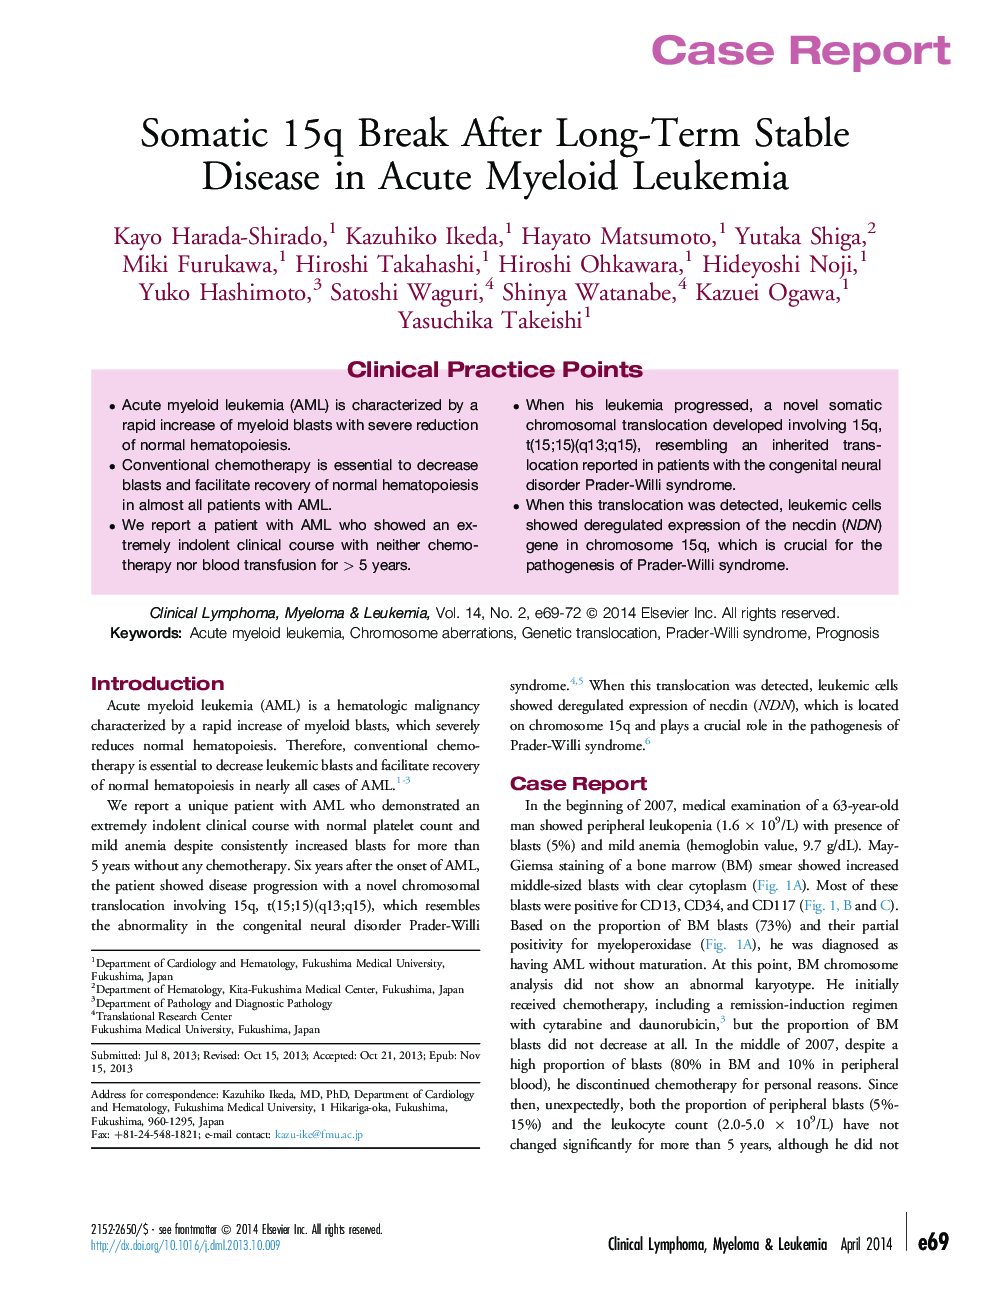 Somatic 15q Break After Long-Term Stable Disease in Acute Myeloid Leukemia